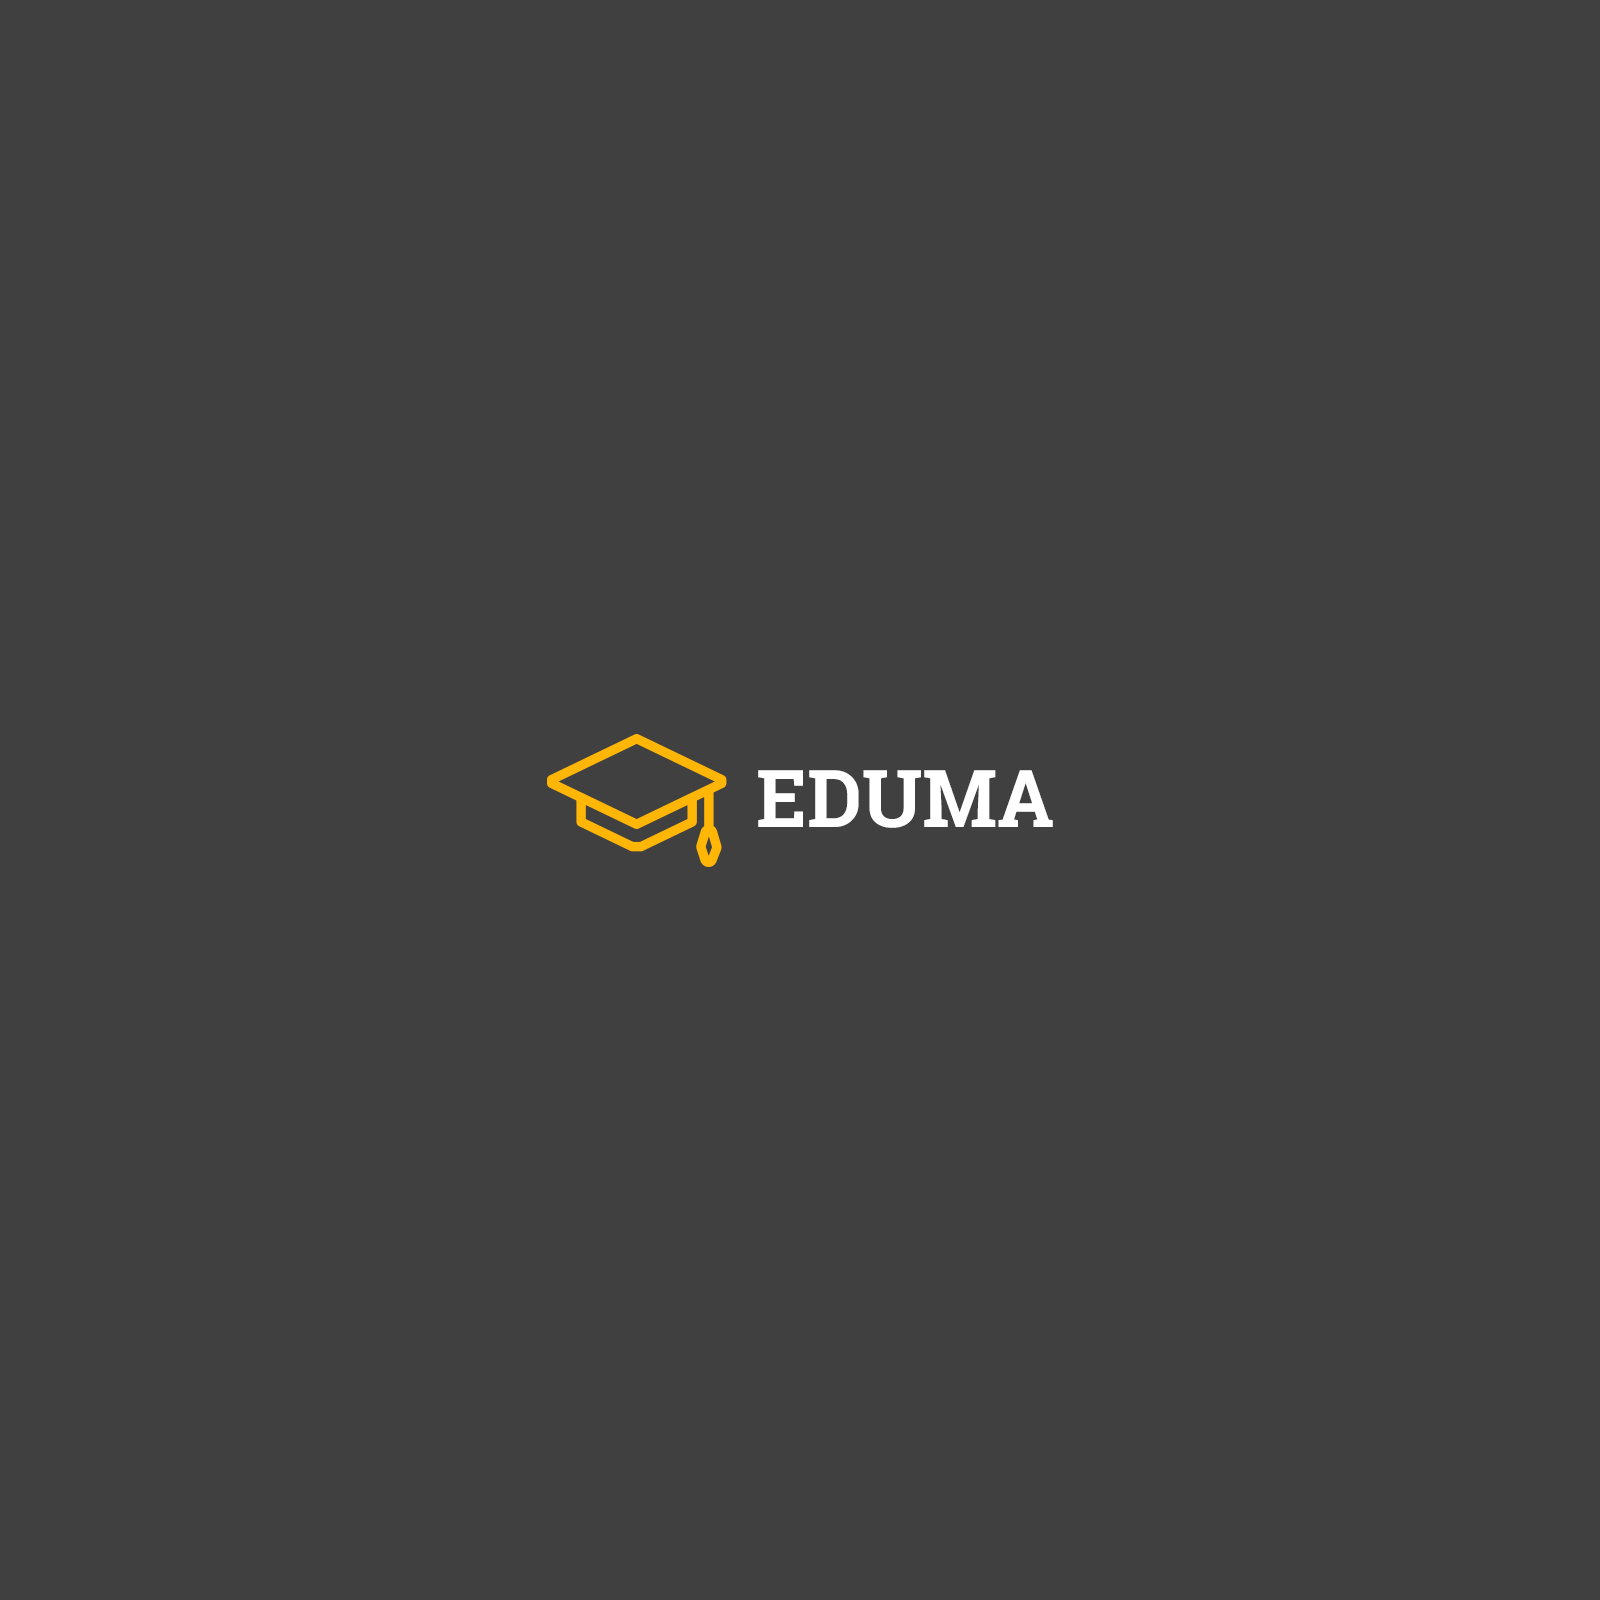 EDUMA logo